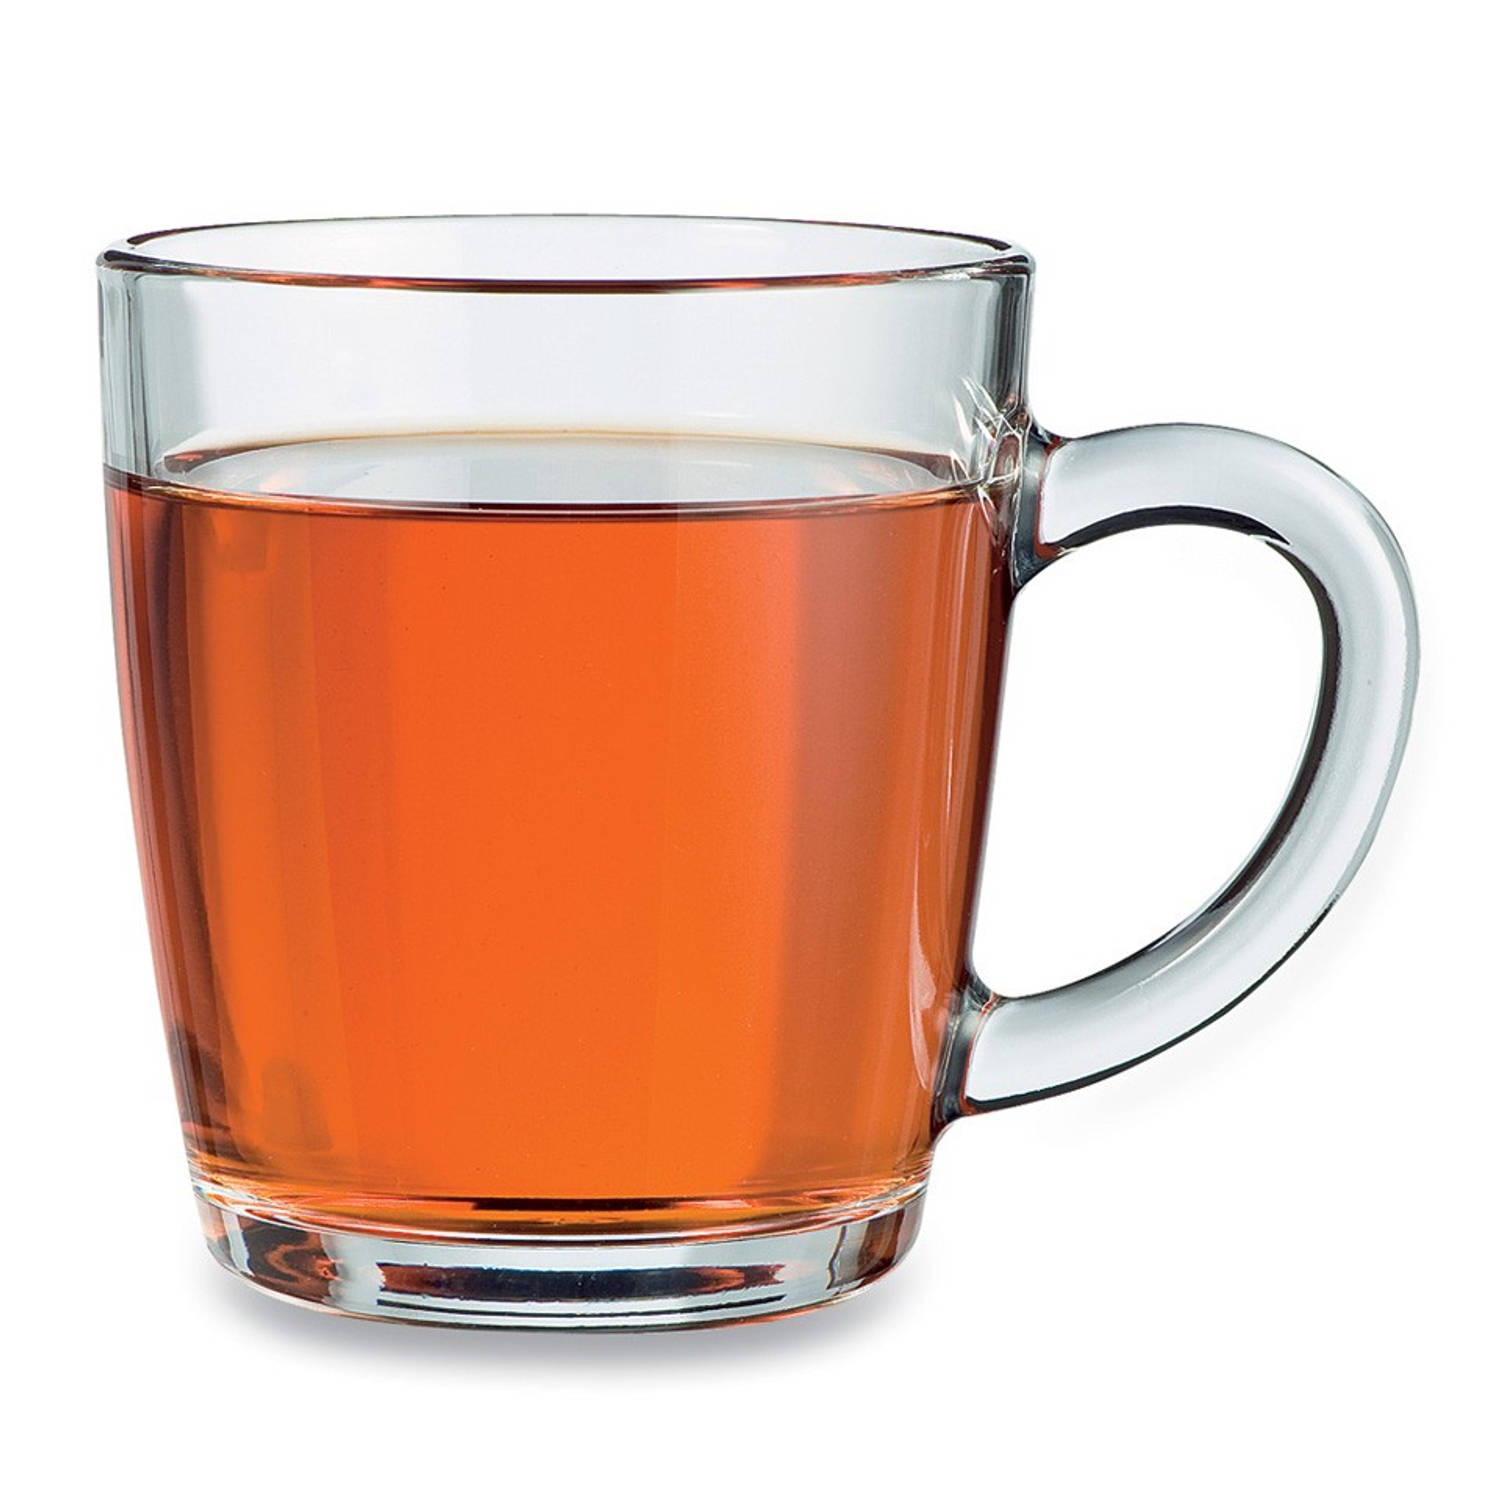 Inefficiënt Sluiting Lol Theeglas American Tea | Blokker